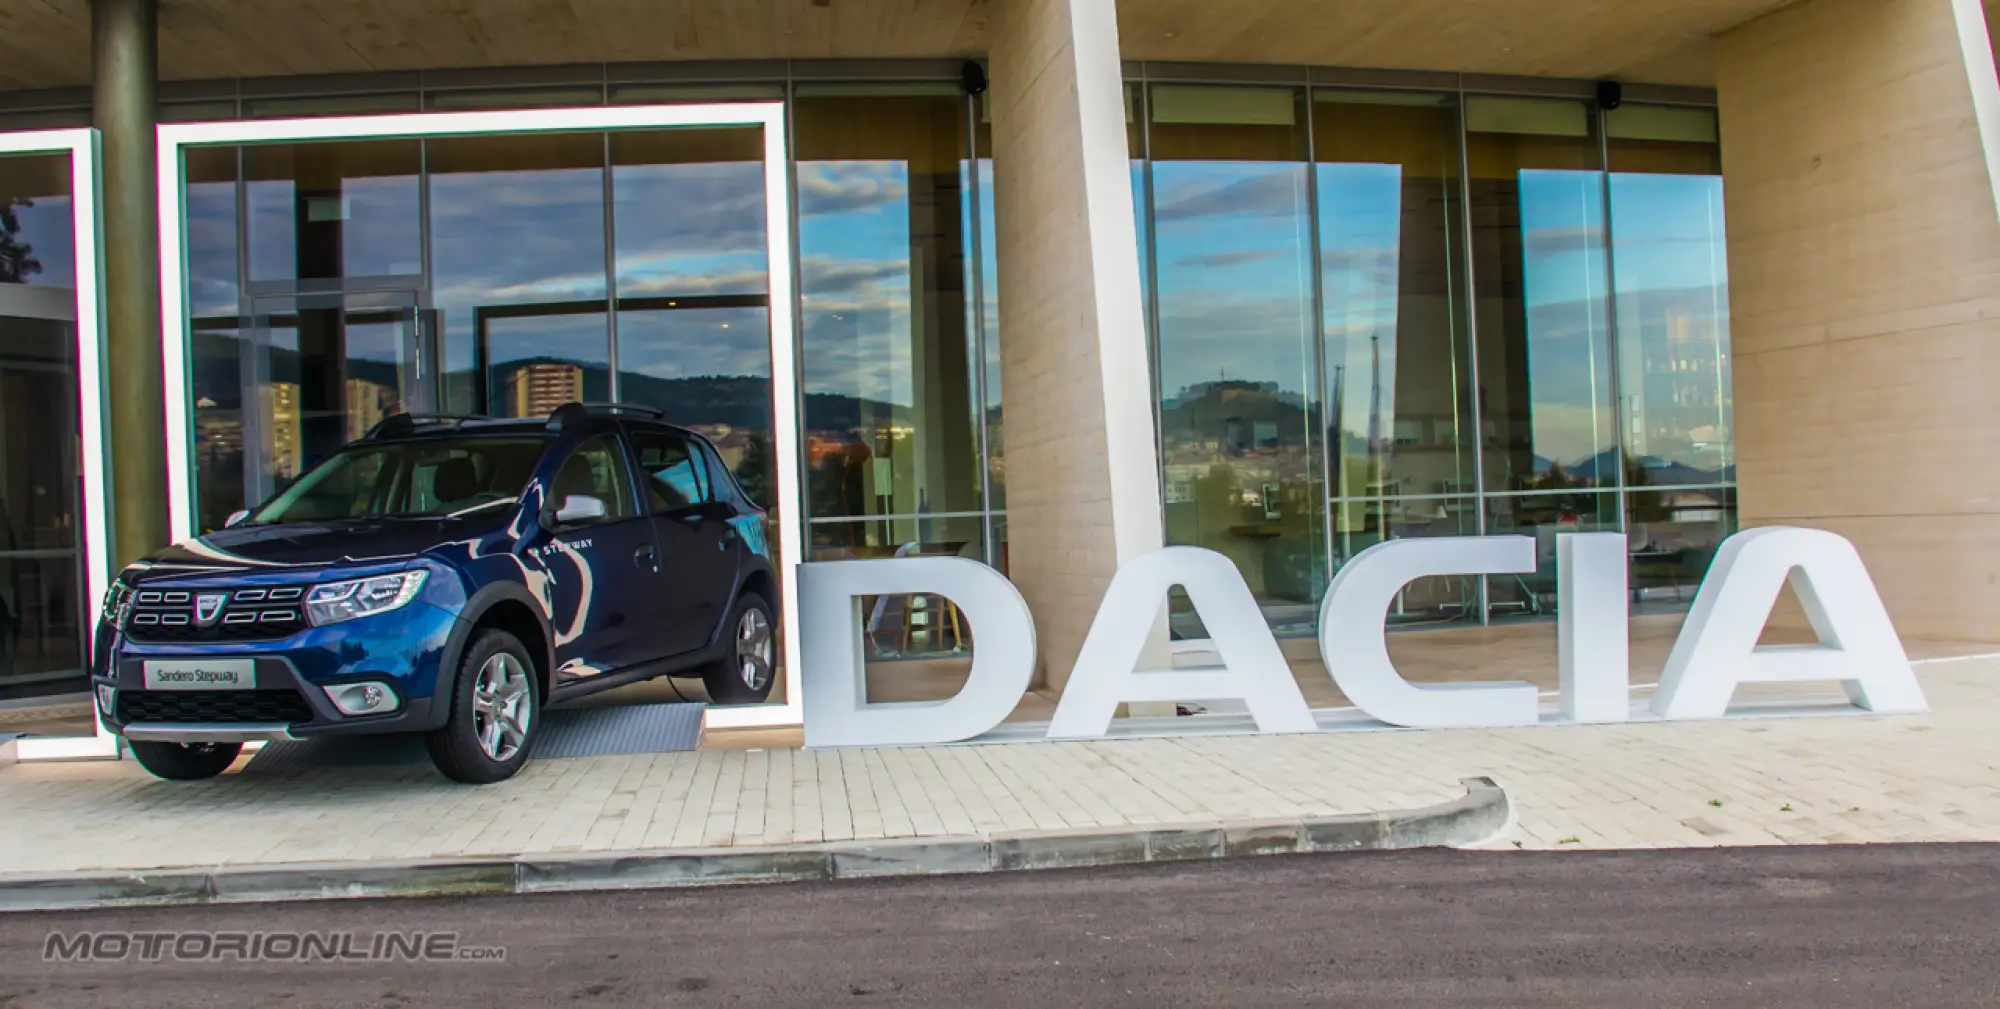 Nuova Gamma Dacia 2017 - Anteprima Test Drive - 1